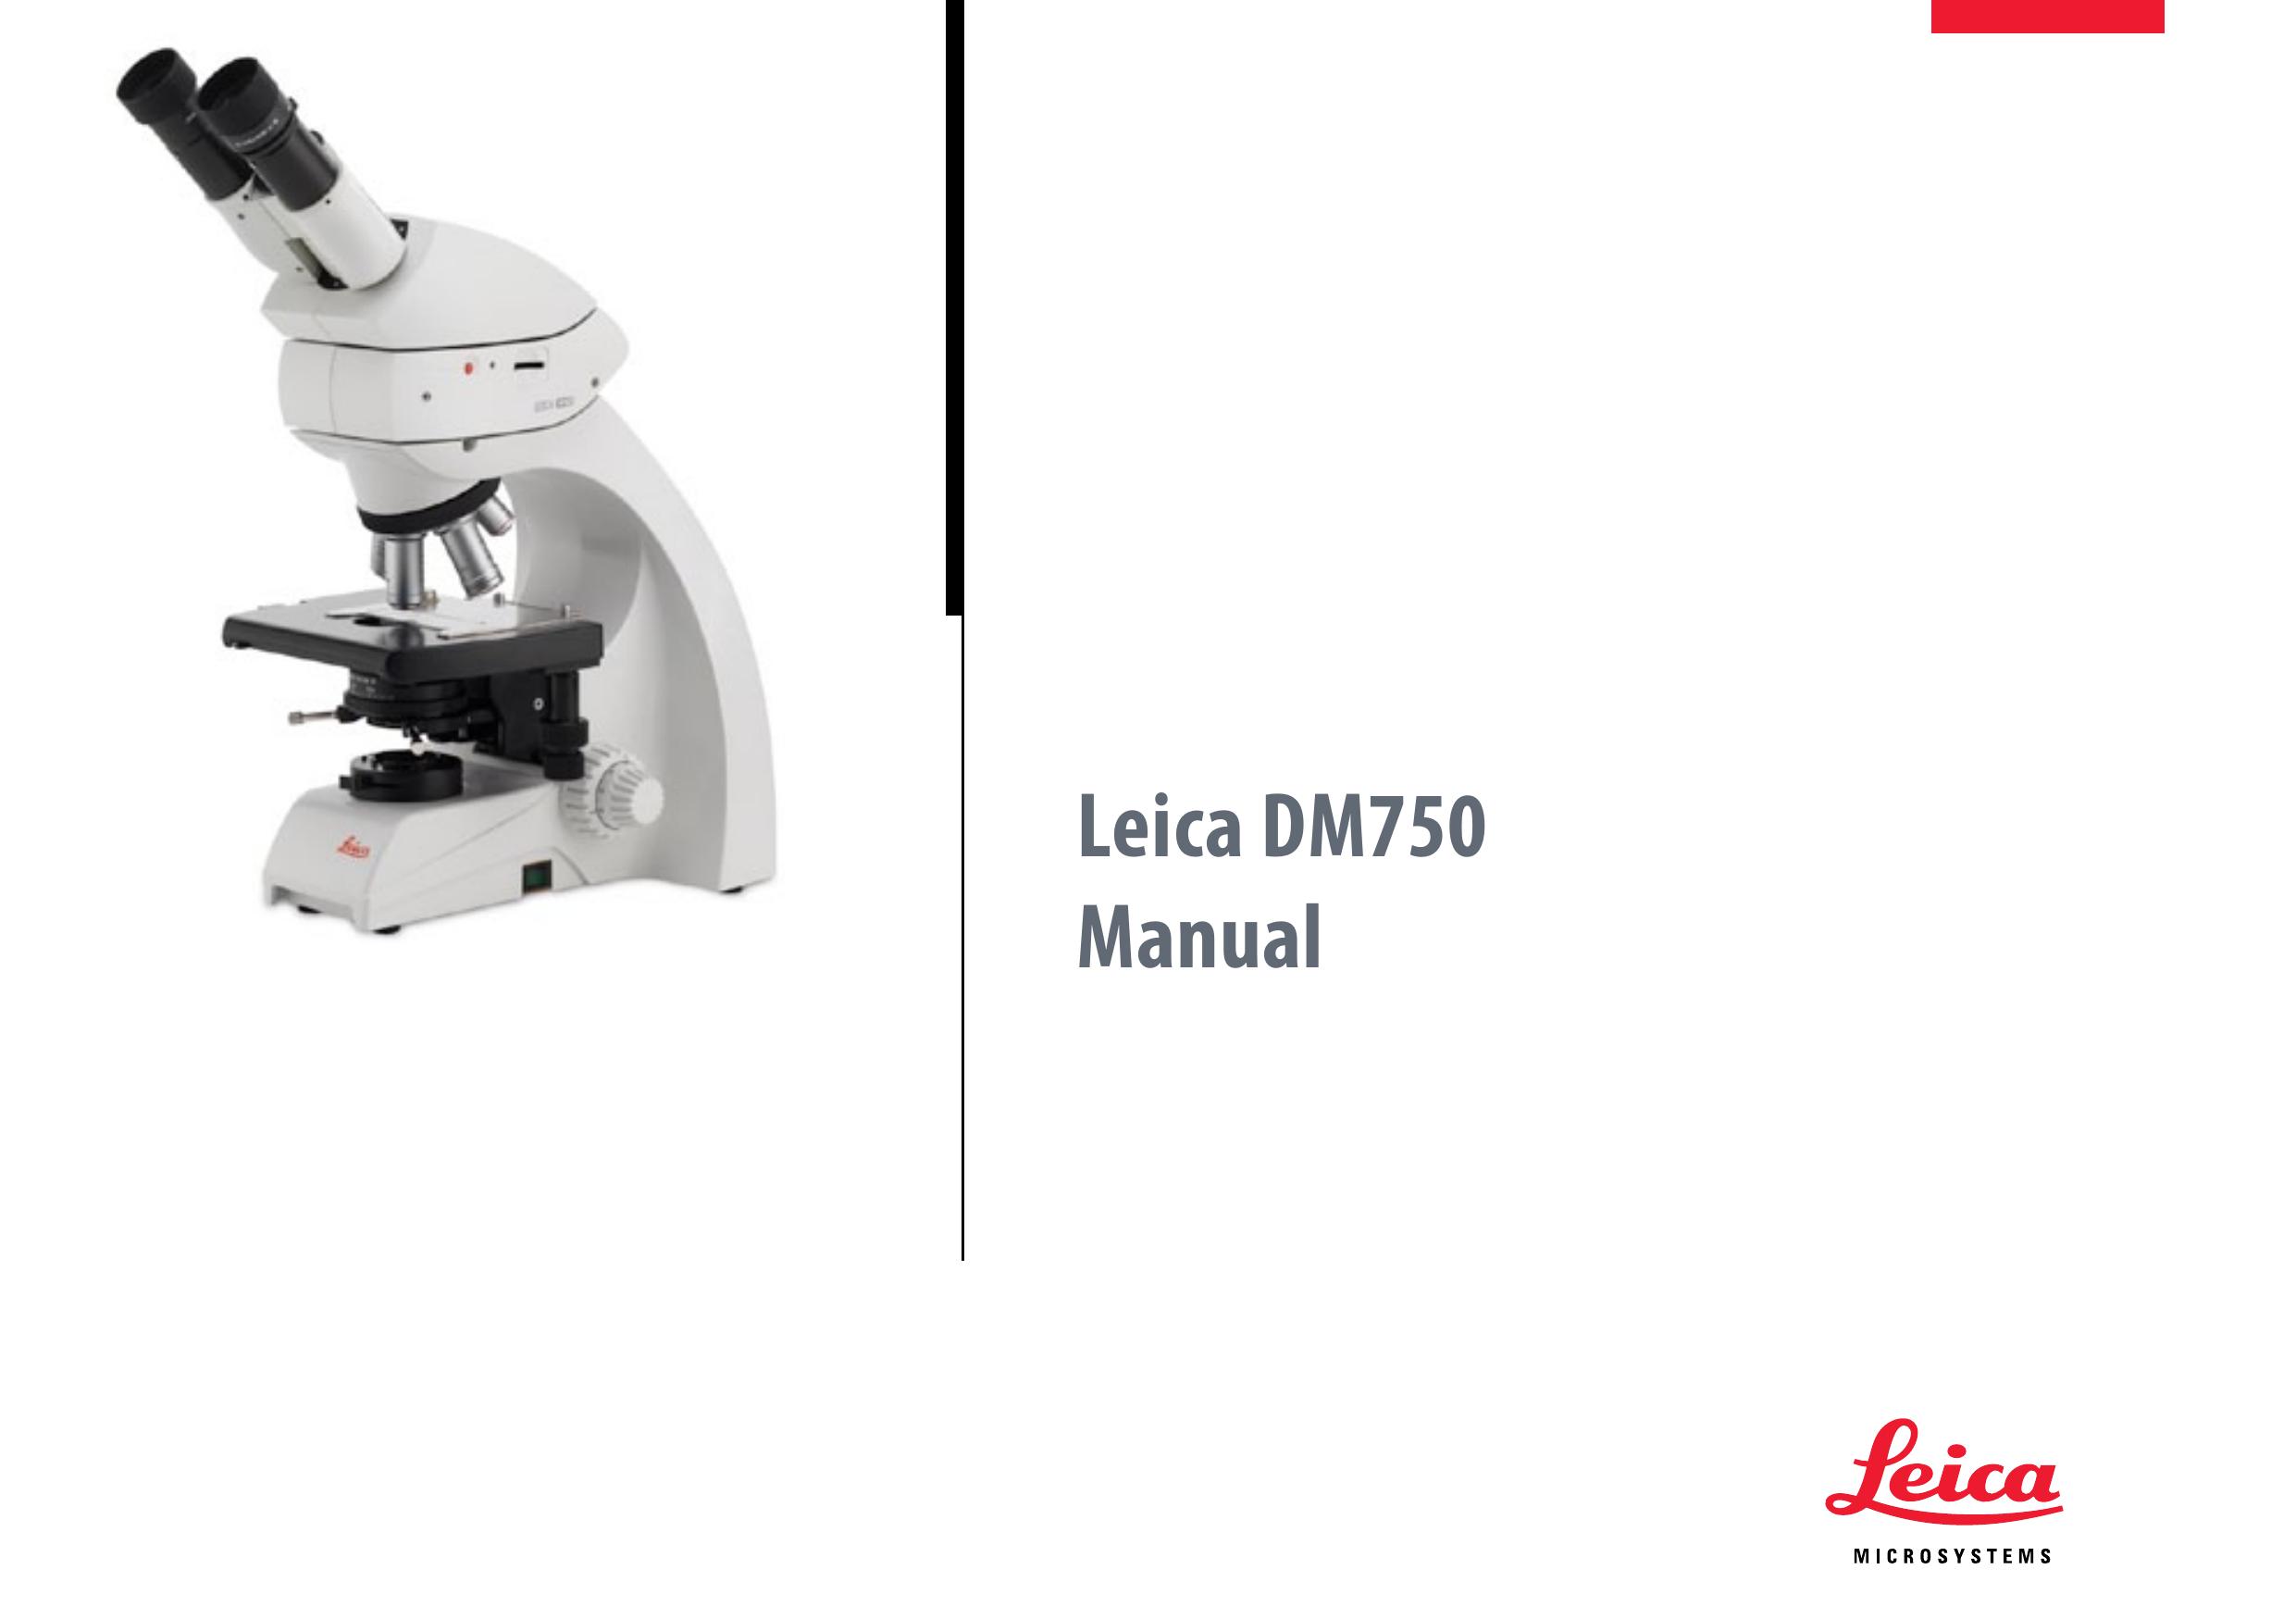 Leica DM750 Microscope & Magnifier User Manual